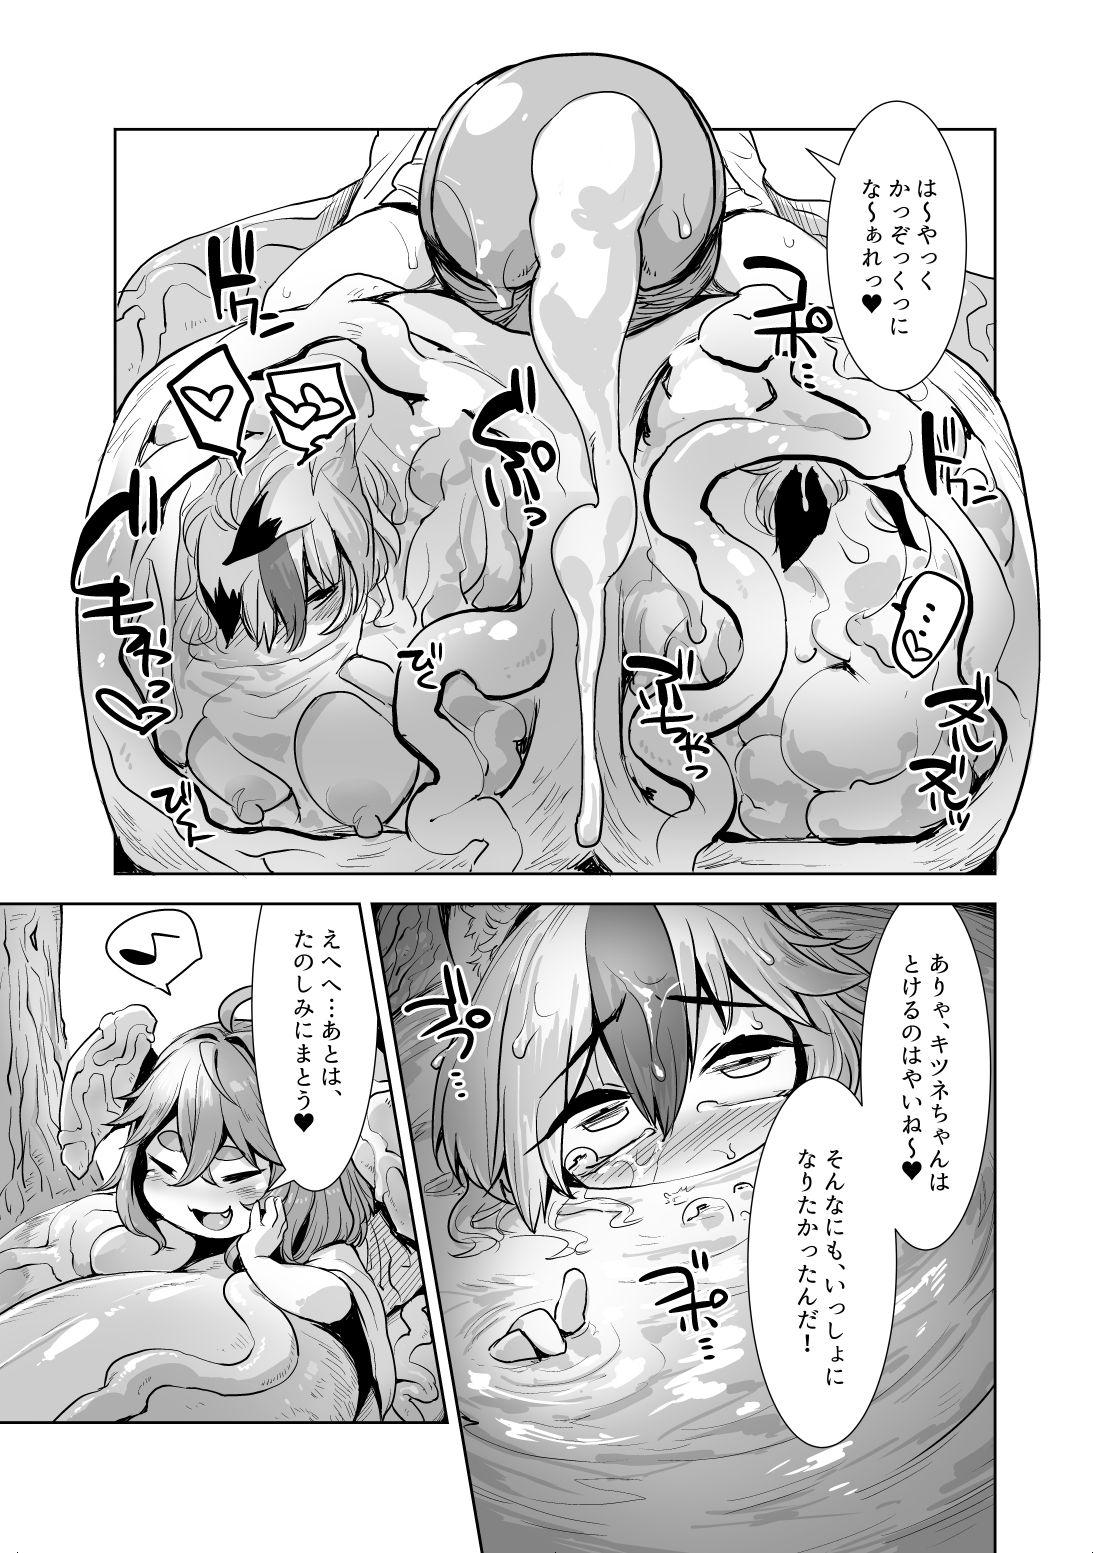 Blowjob Yappari Uchinoko wa Kawaii na Gayemo - Page 5